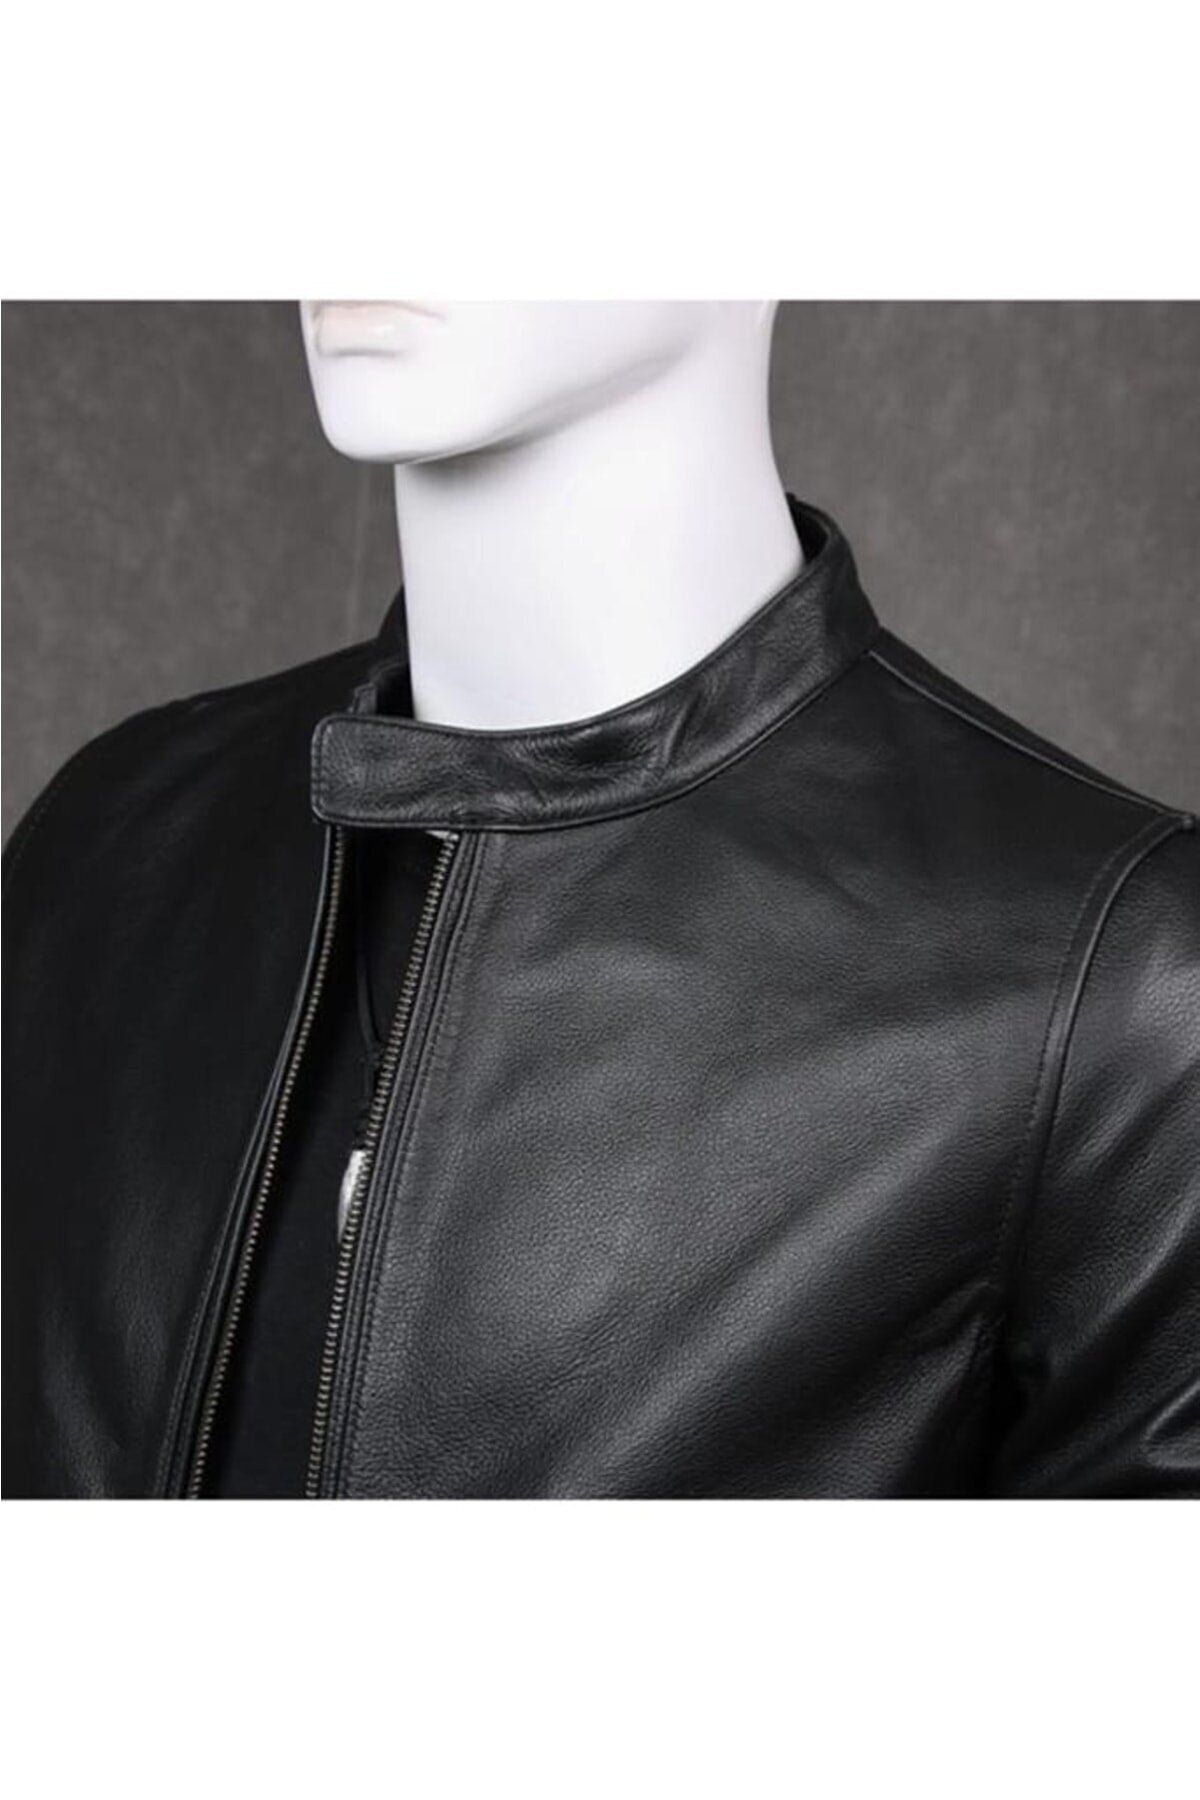 Genuine Leather Black British Collar Sport Men's Leather Jacket